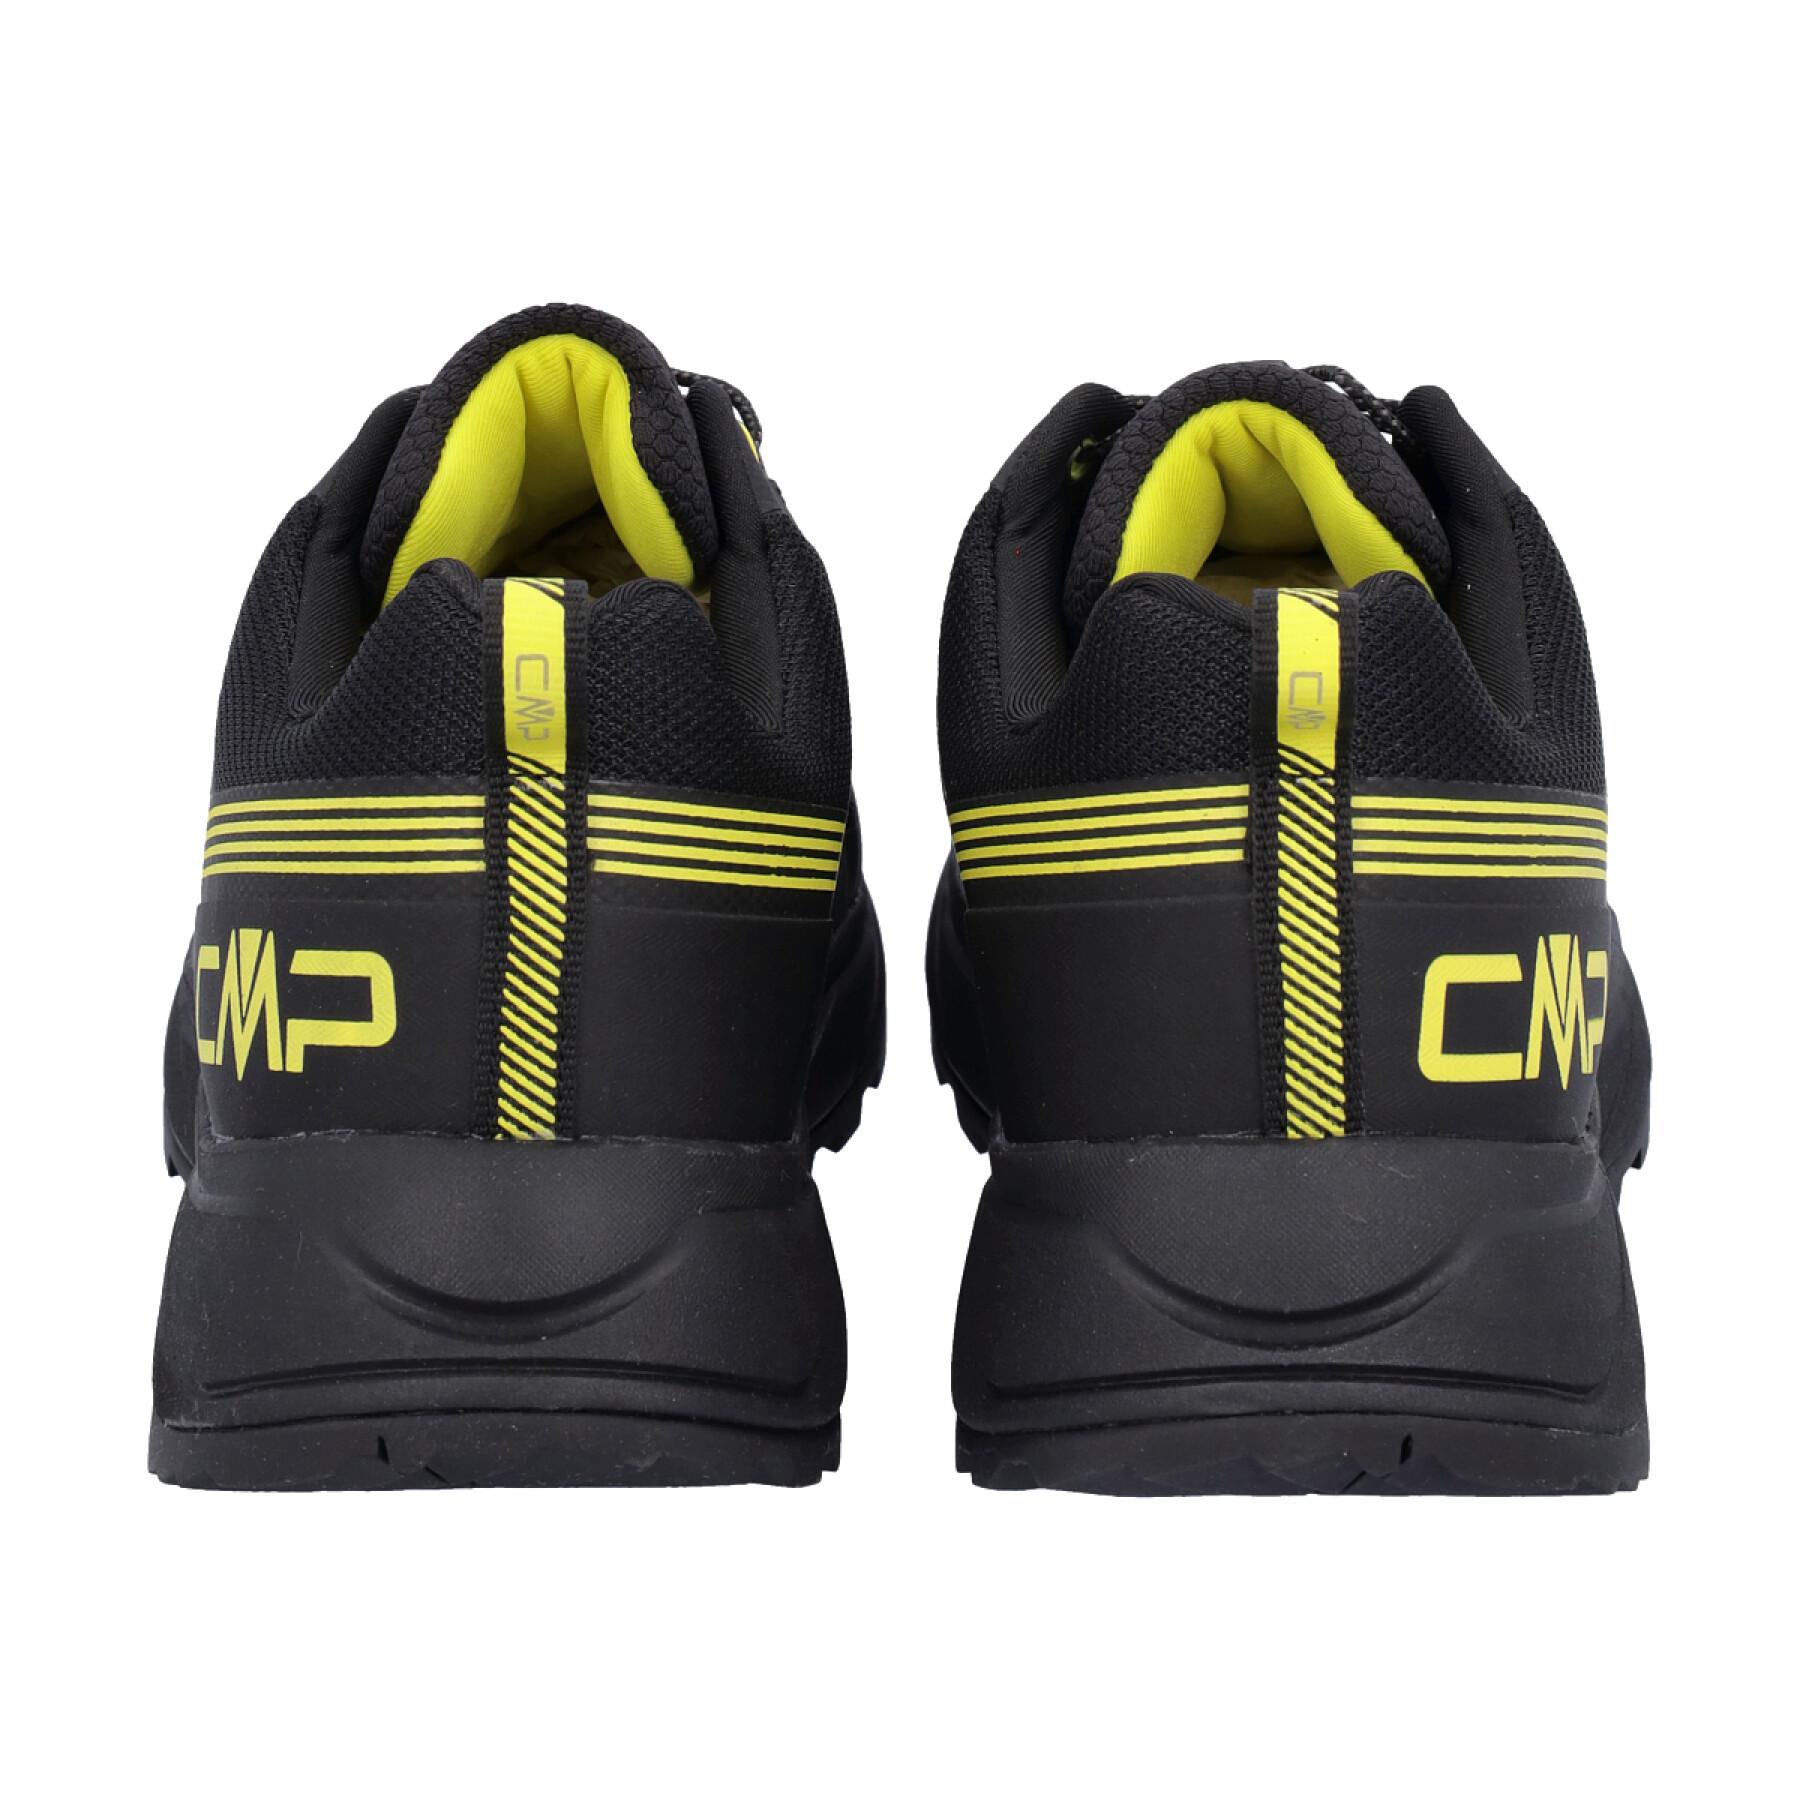 Chaussures de trail CMP Marco Olmo 2 0